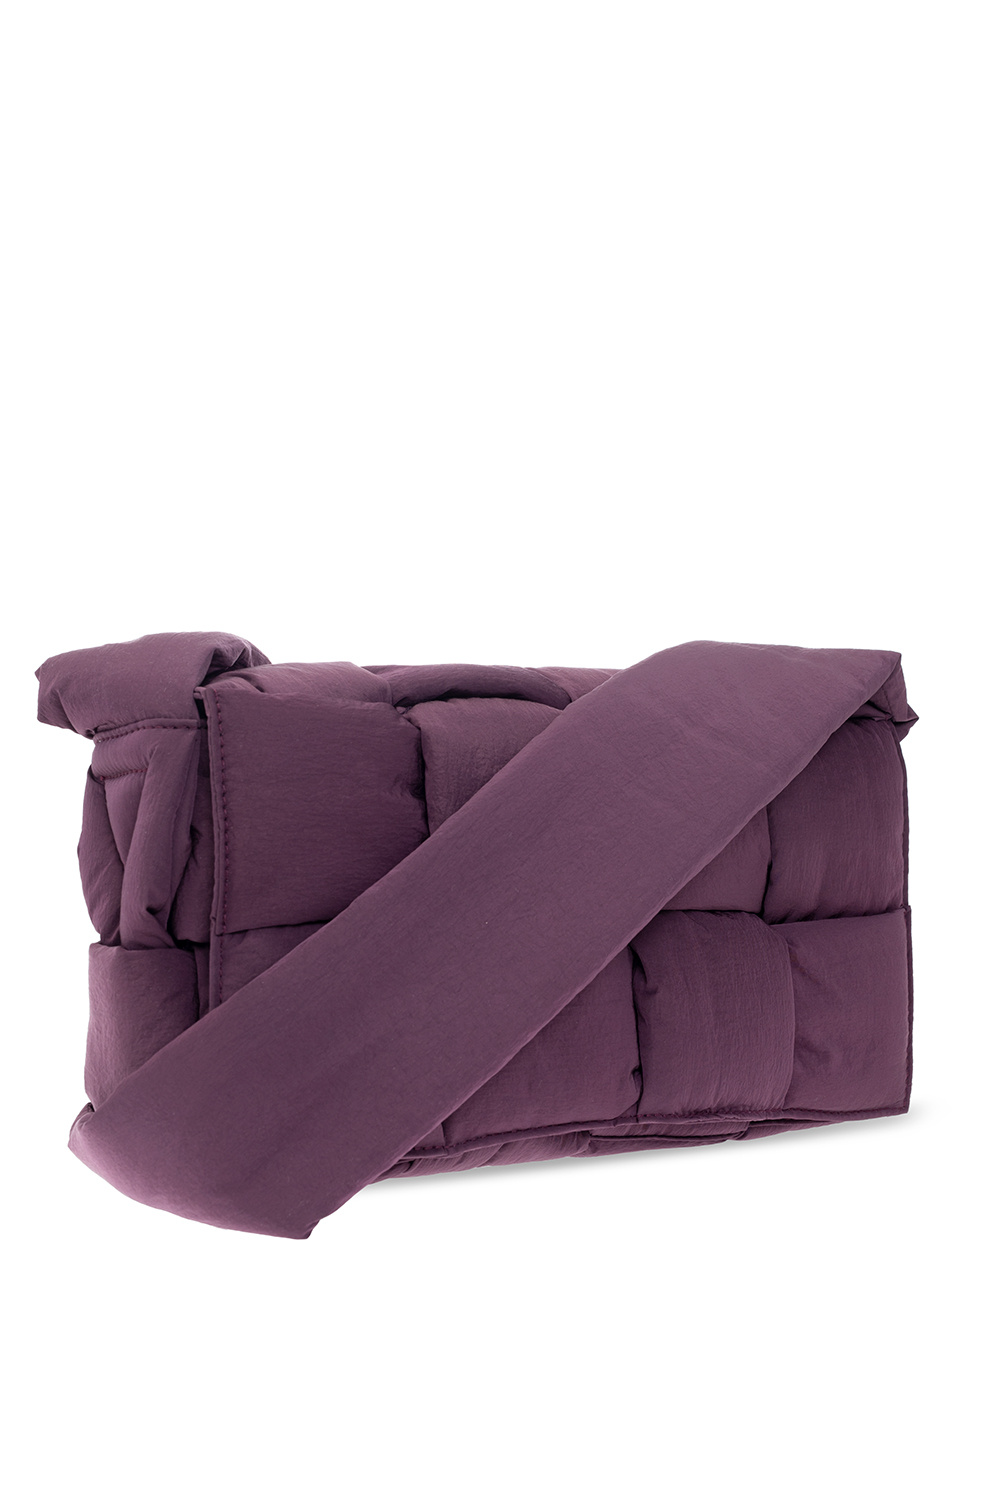 Bottega Veneta Shoulder Bag Purple Fur Size: W17xH8.7 in. Strap